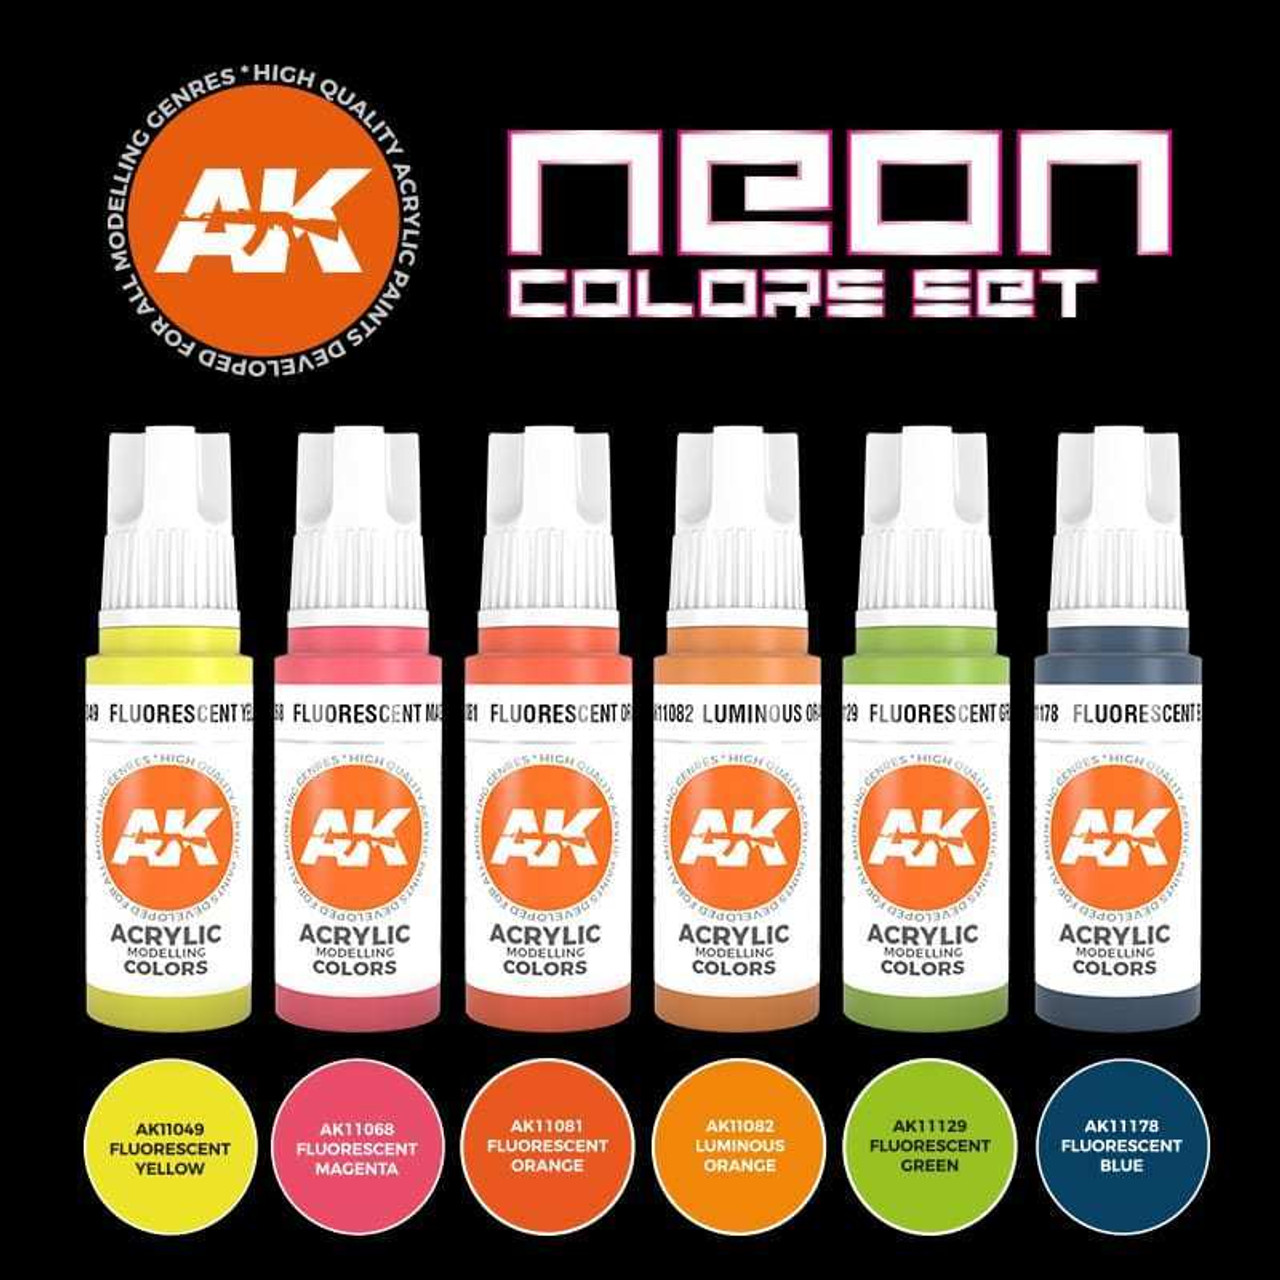 AKI11610 AK Interactive 3G Neon Color Set